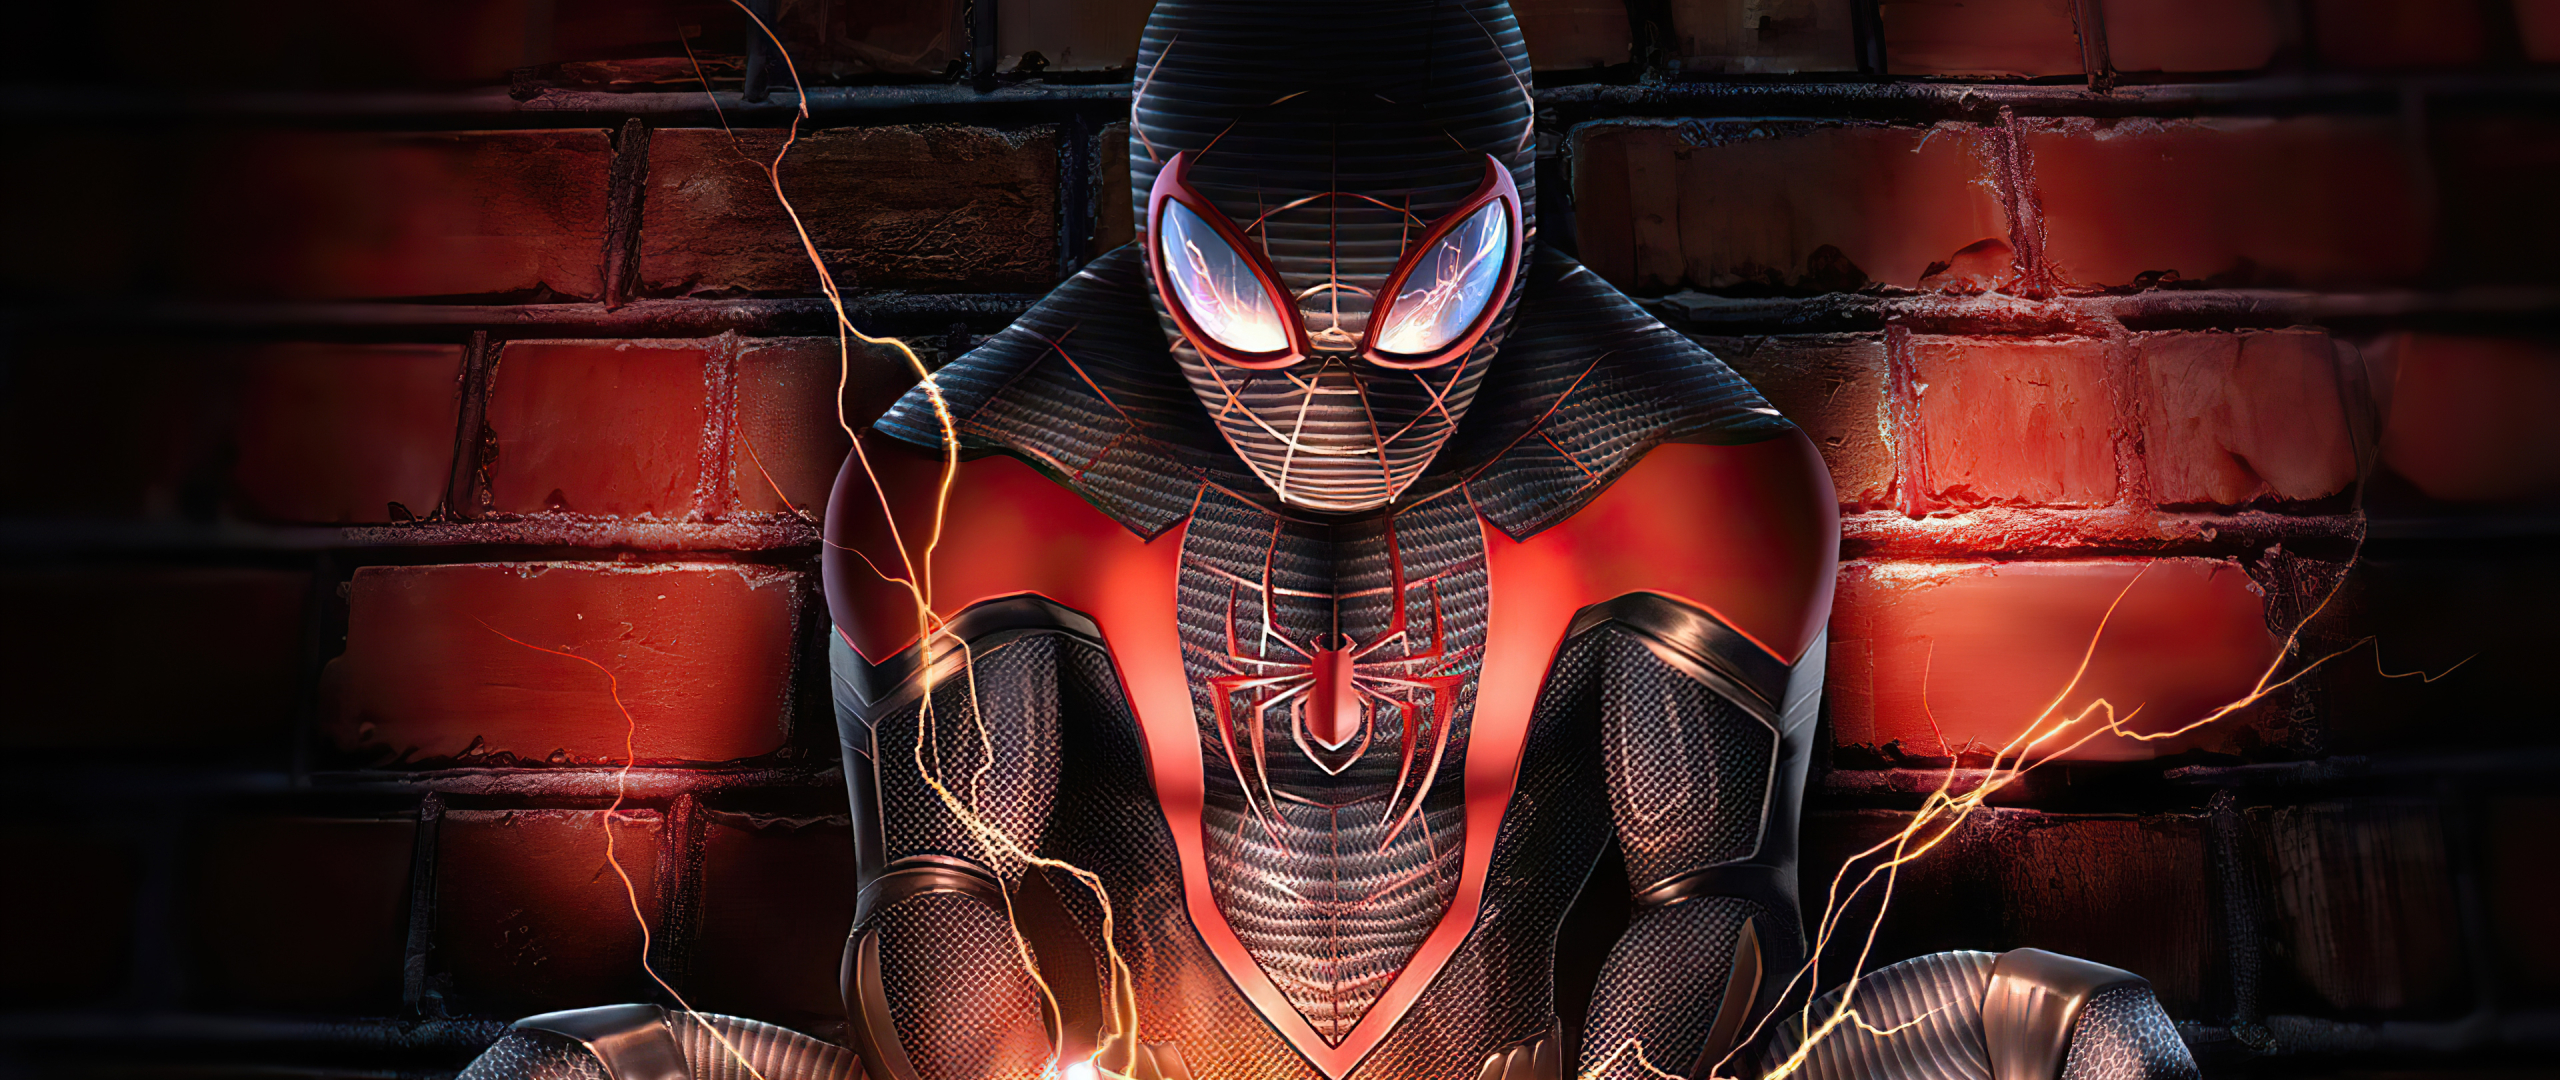 download spider man 4 release date 2023